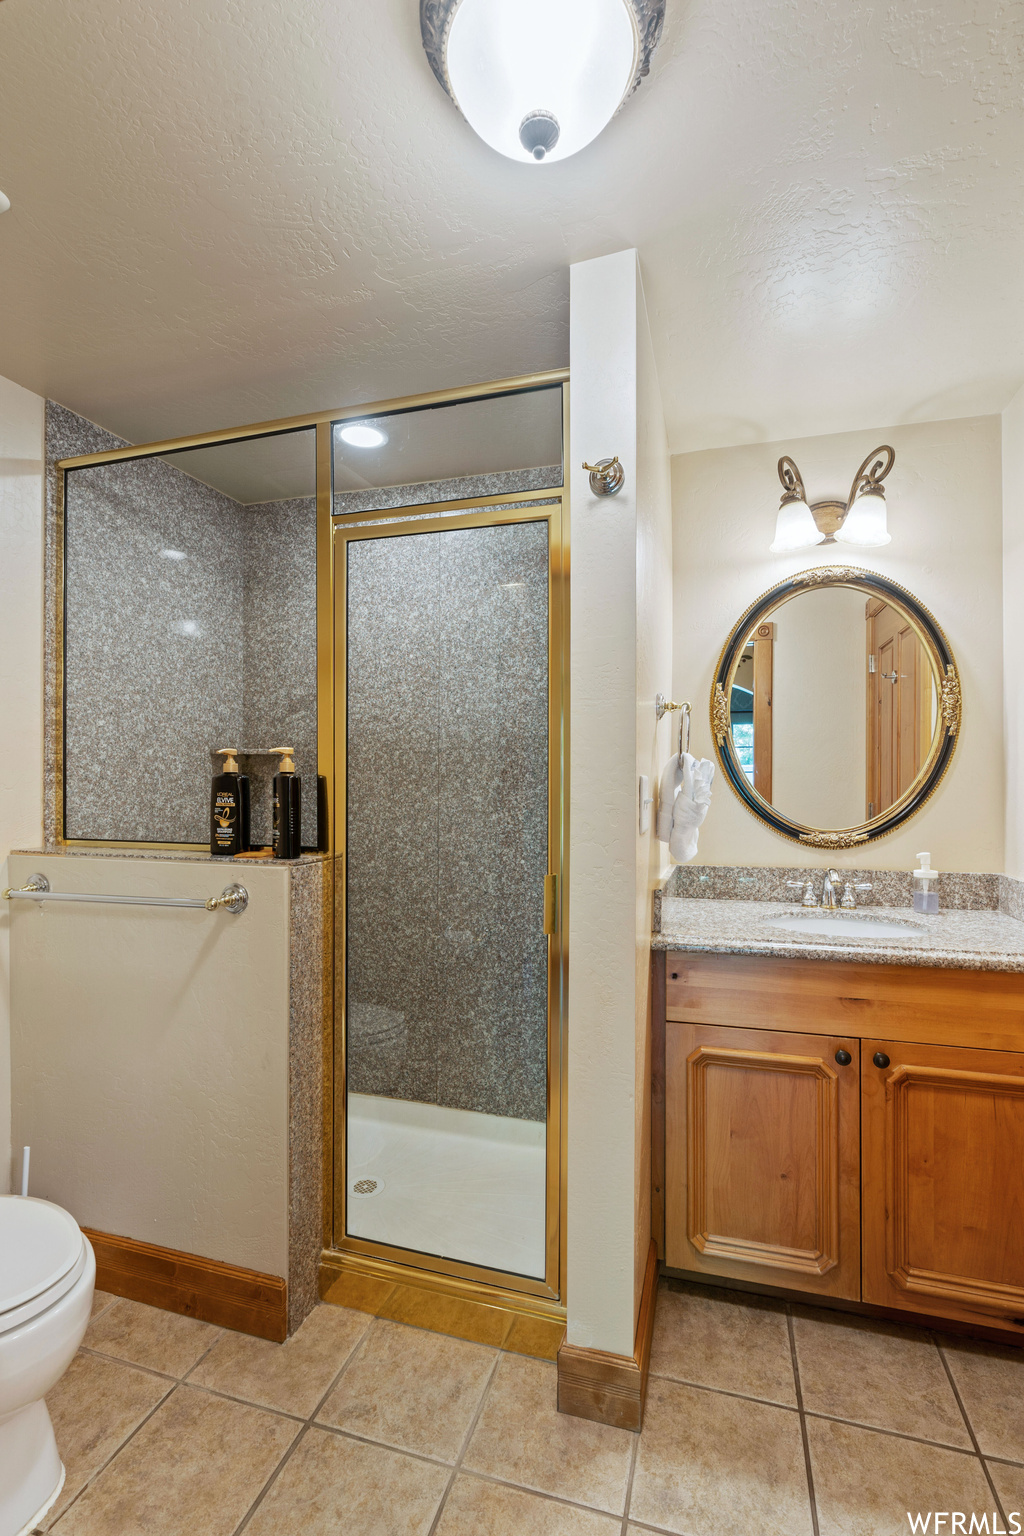 Full bathroom featuring tile floors, mirror, vanity, toilet, and shower with glass door